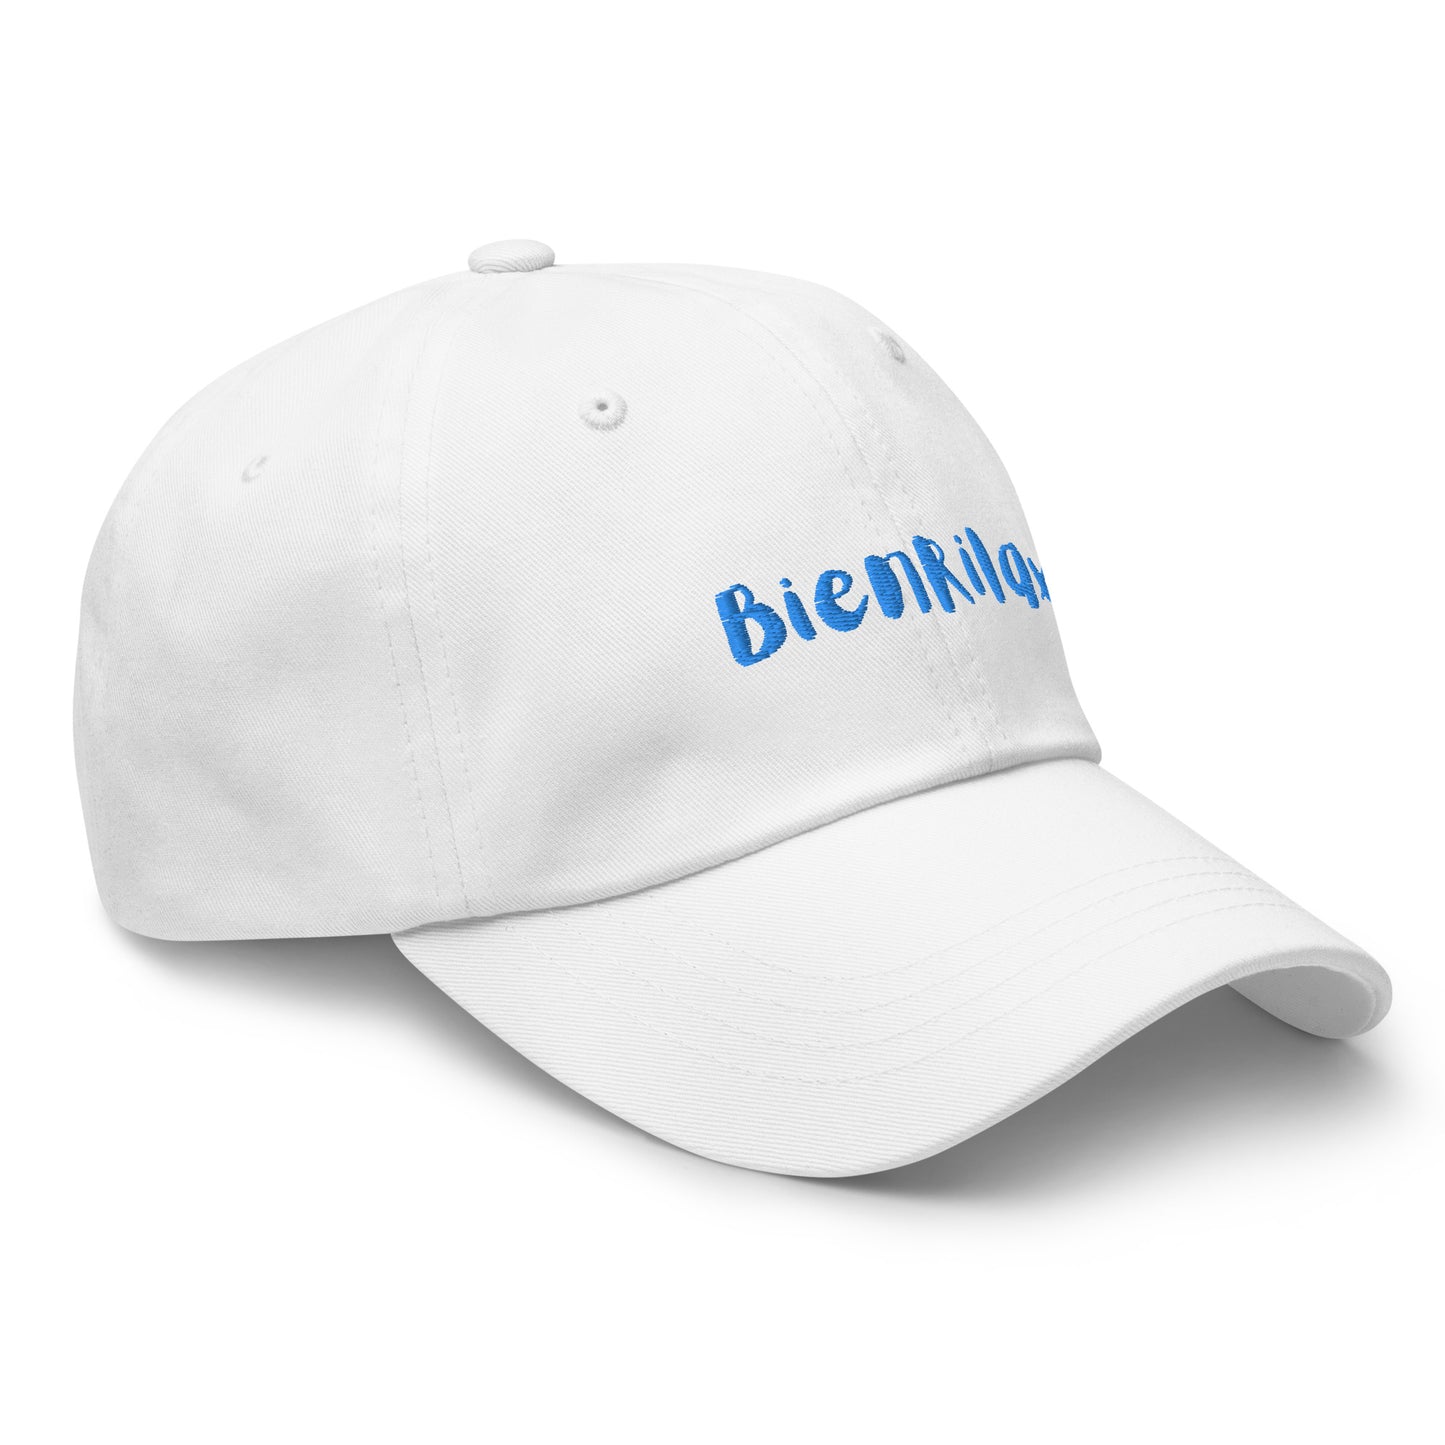 Classic BienRilax Dad hat